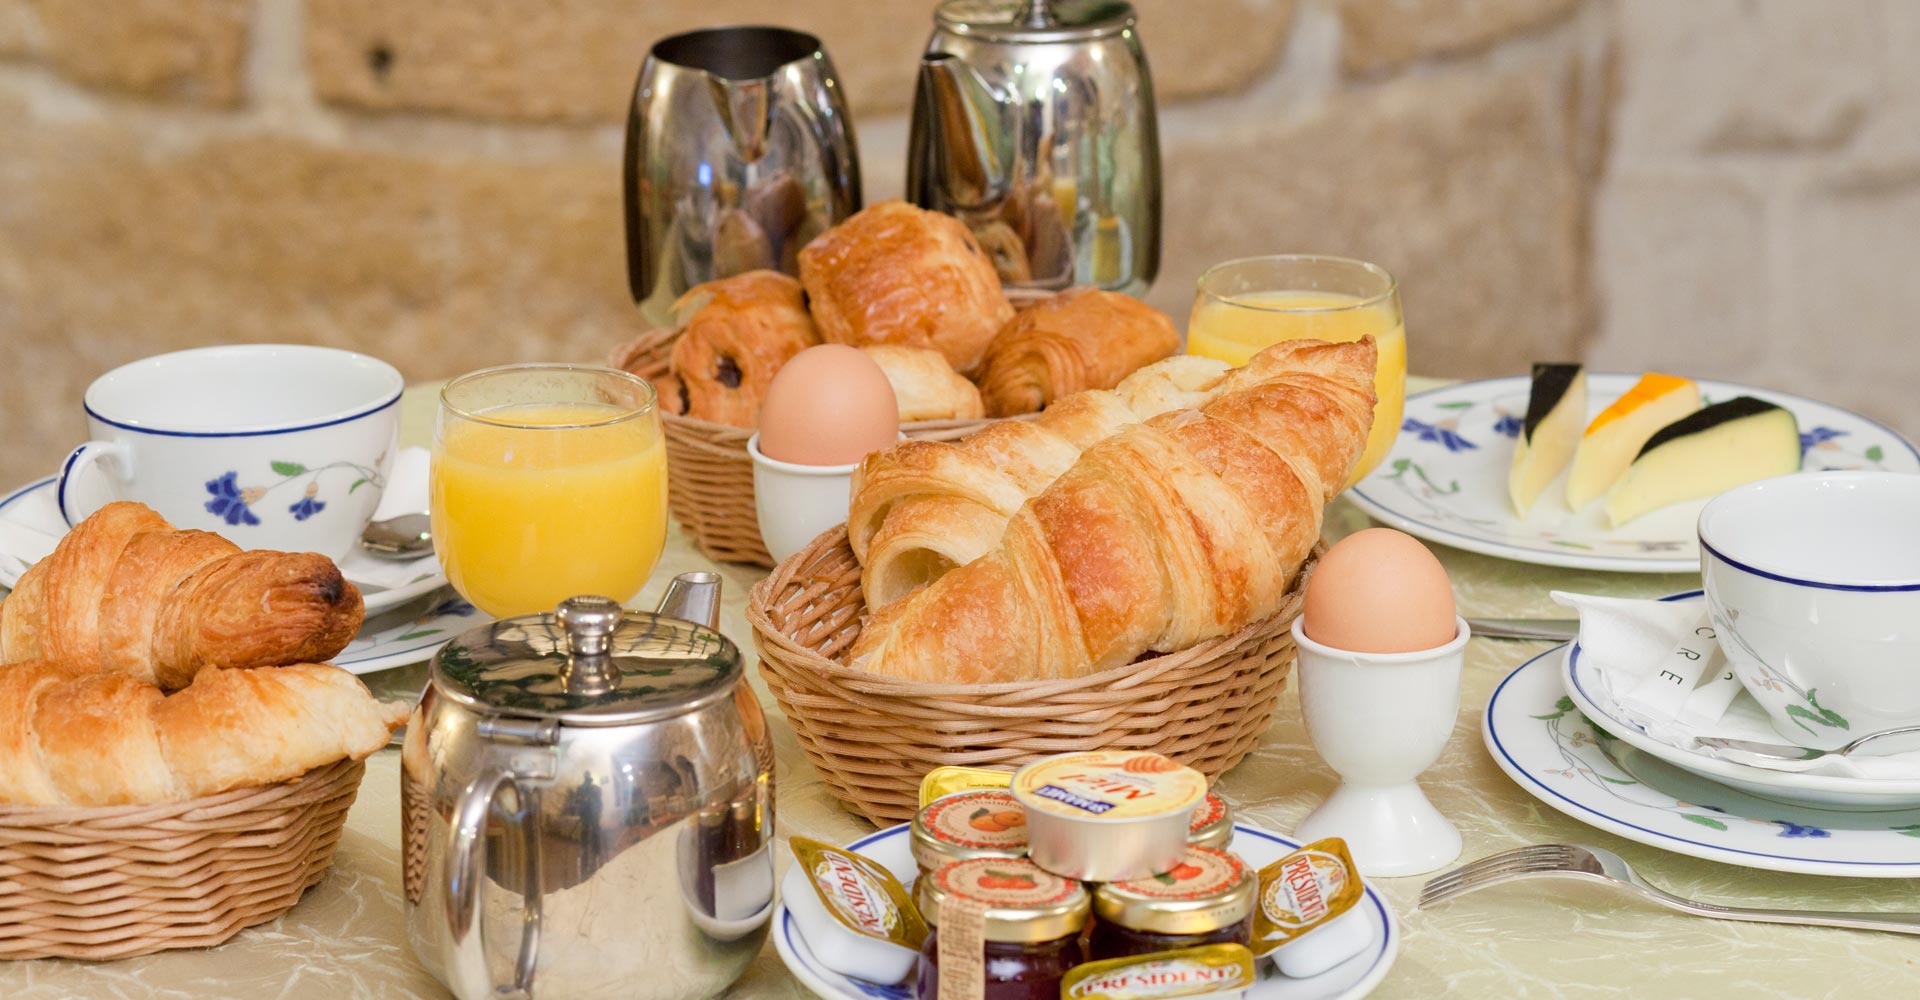 Hotel Beaubourg - Breakfast